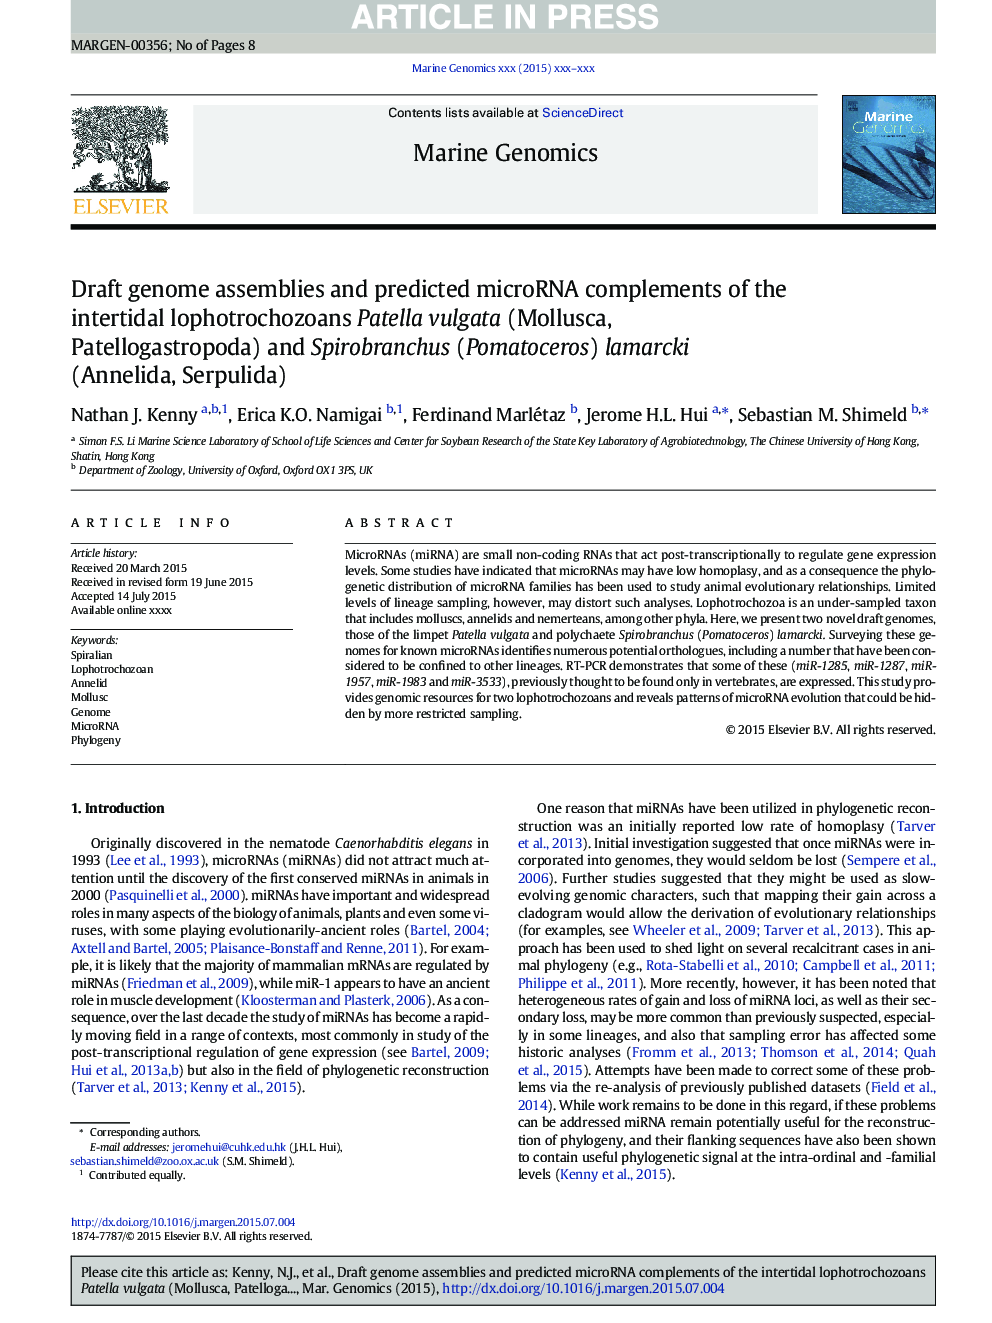 Draft genome assemblies and predicted microRNA complements of the intertidal lophotrochozoans Patella vulgata (Mollusca, Patellogastropoda) and Spirobranchus (Pomatoceros) lamarcki (Annelida, Serpulida)